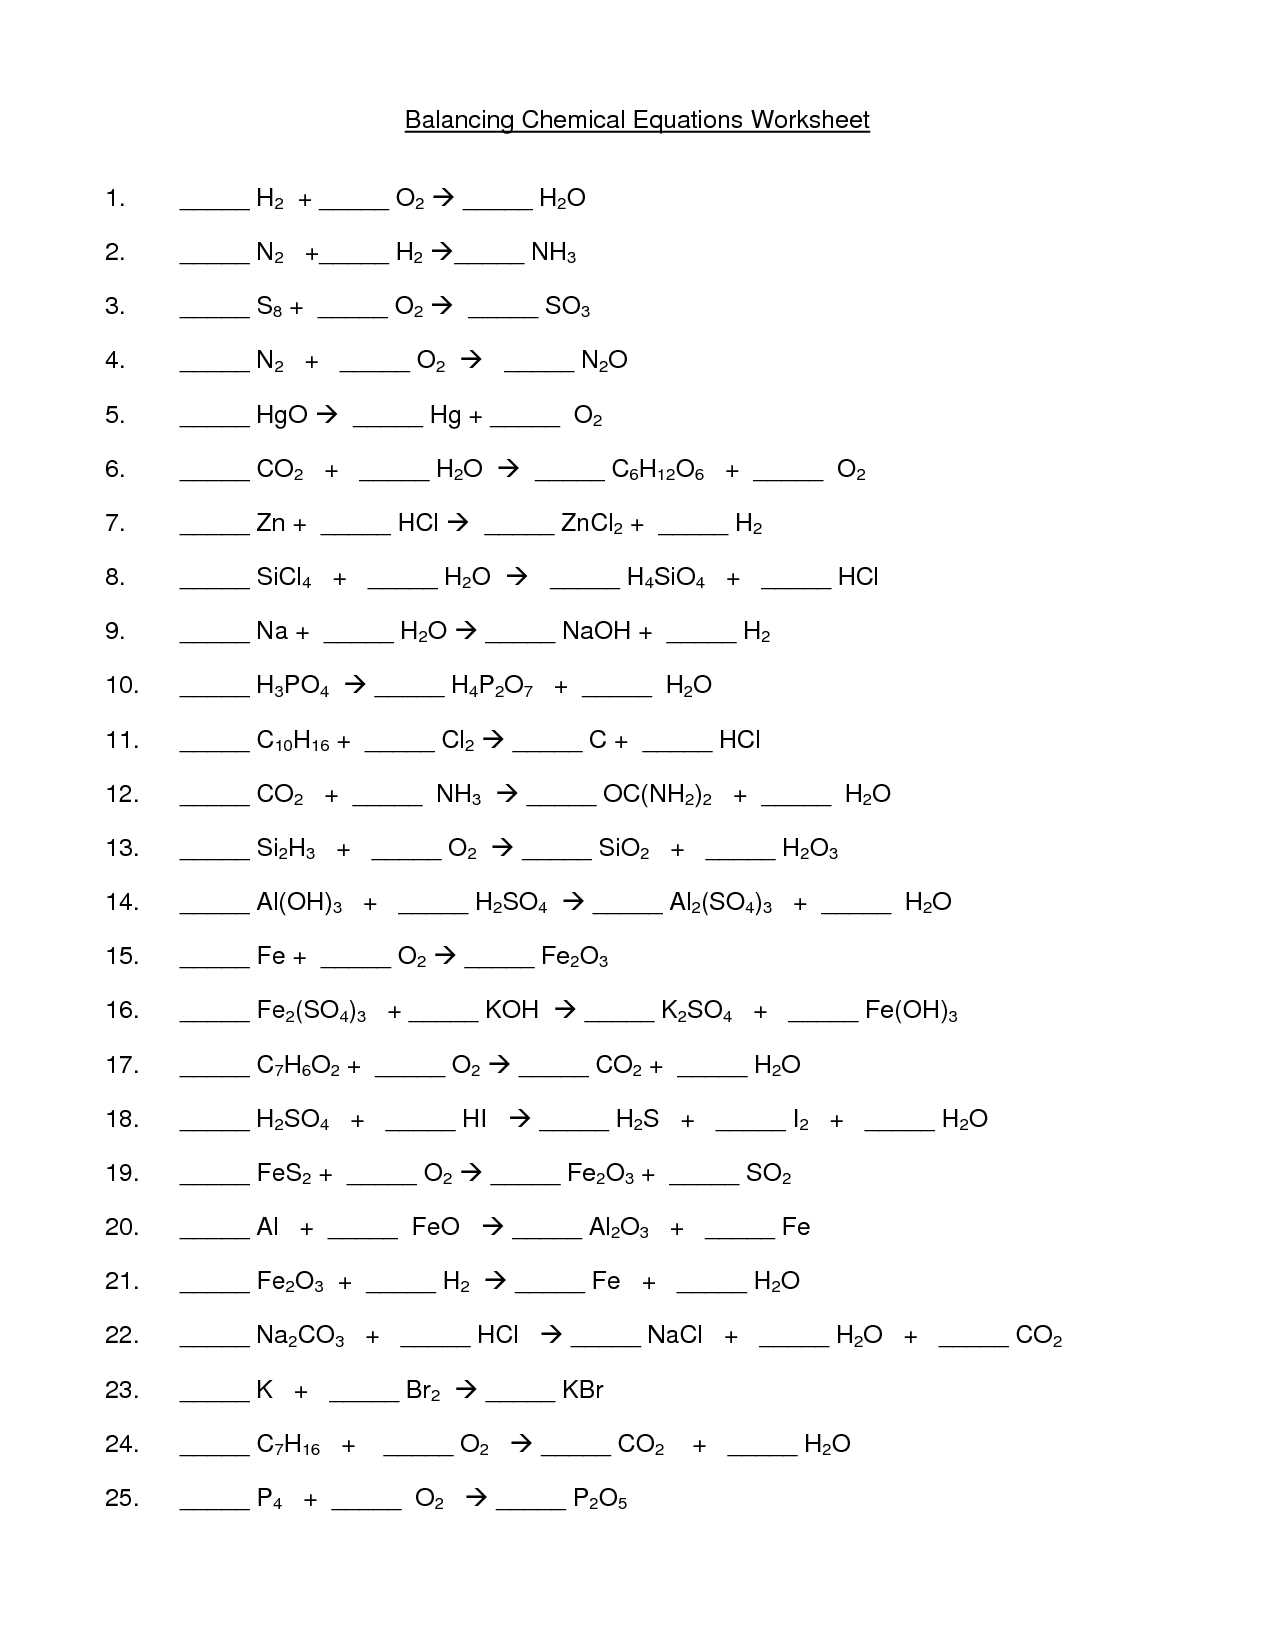 Balancing Chemical Equations Worksheet Answers Image